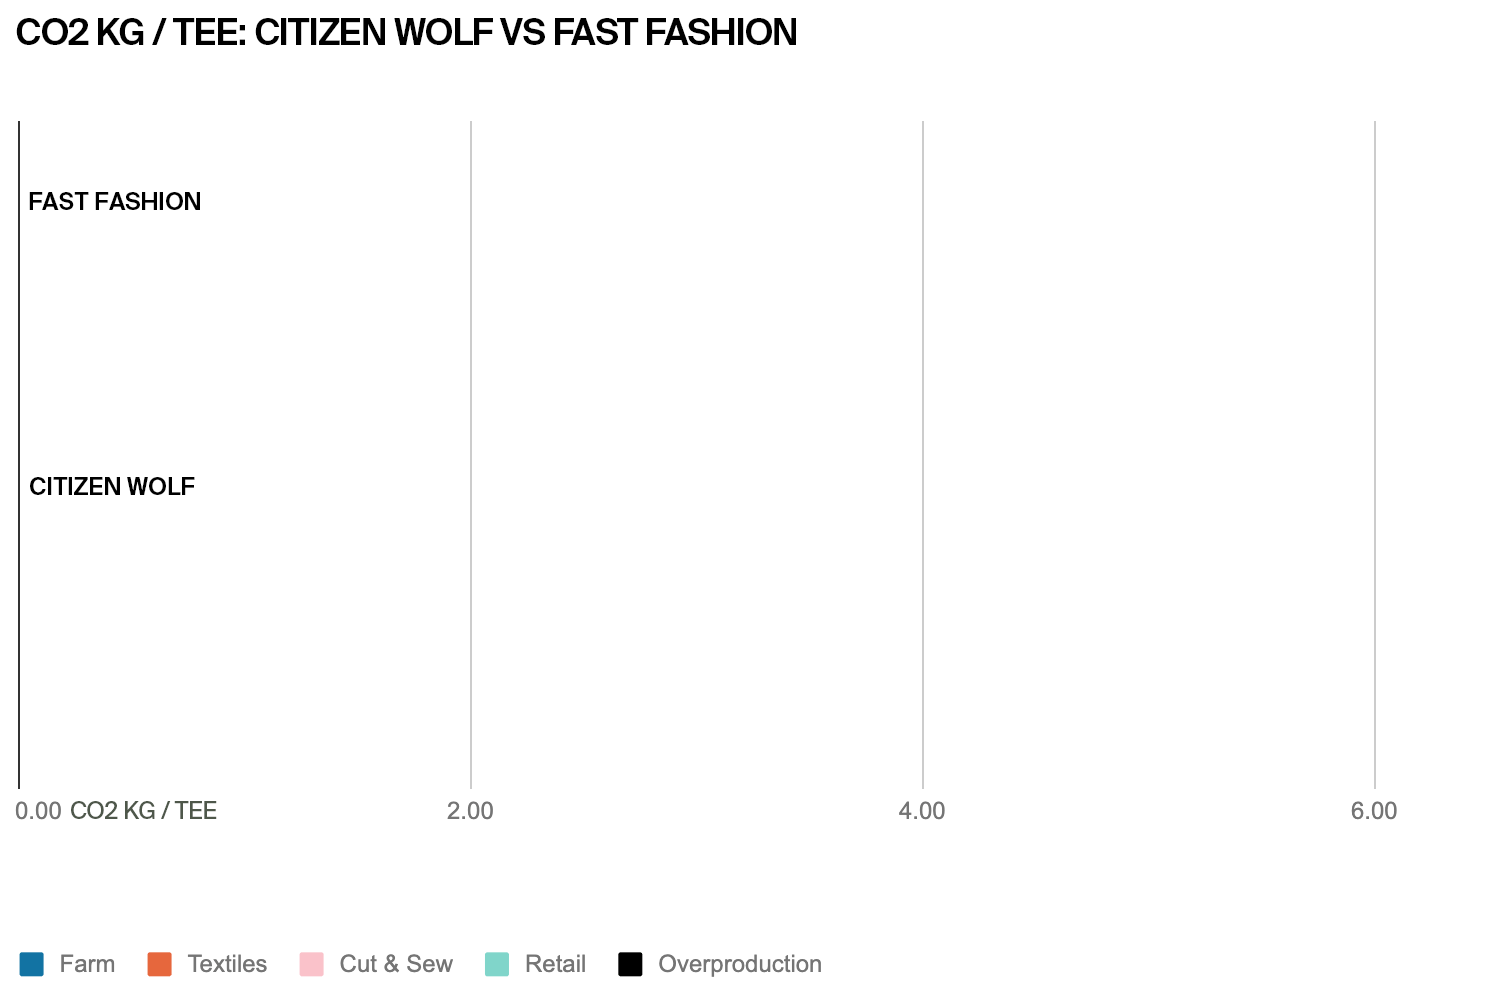 Magic Fit® technology creates 48% less carbon than fast fashion | Citizen Wolf